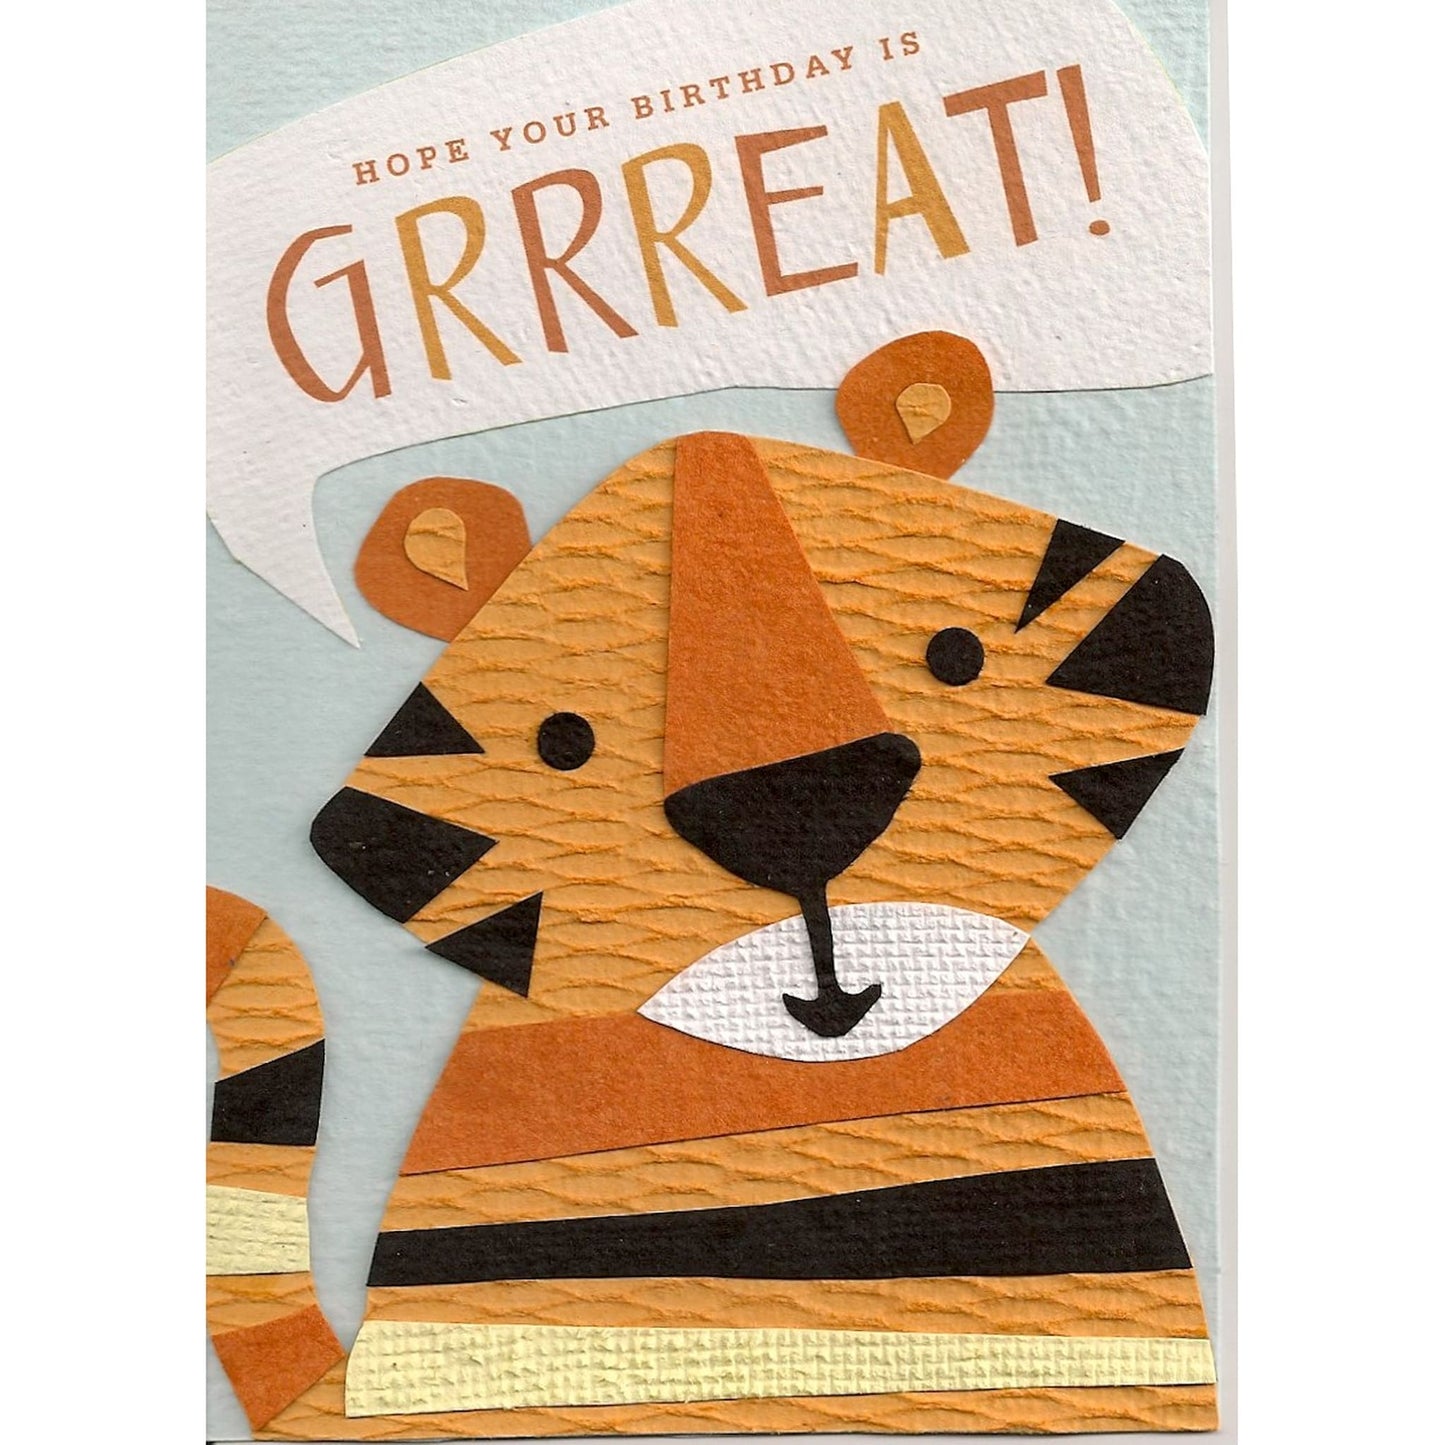 Grrreat birthday - handmade and recycled birthday card